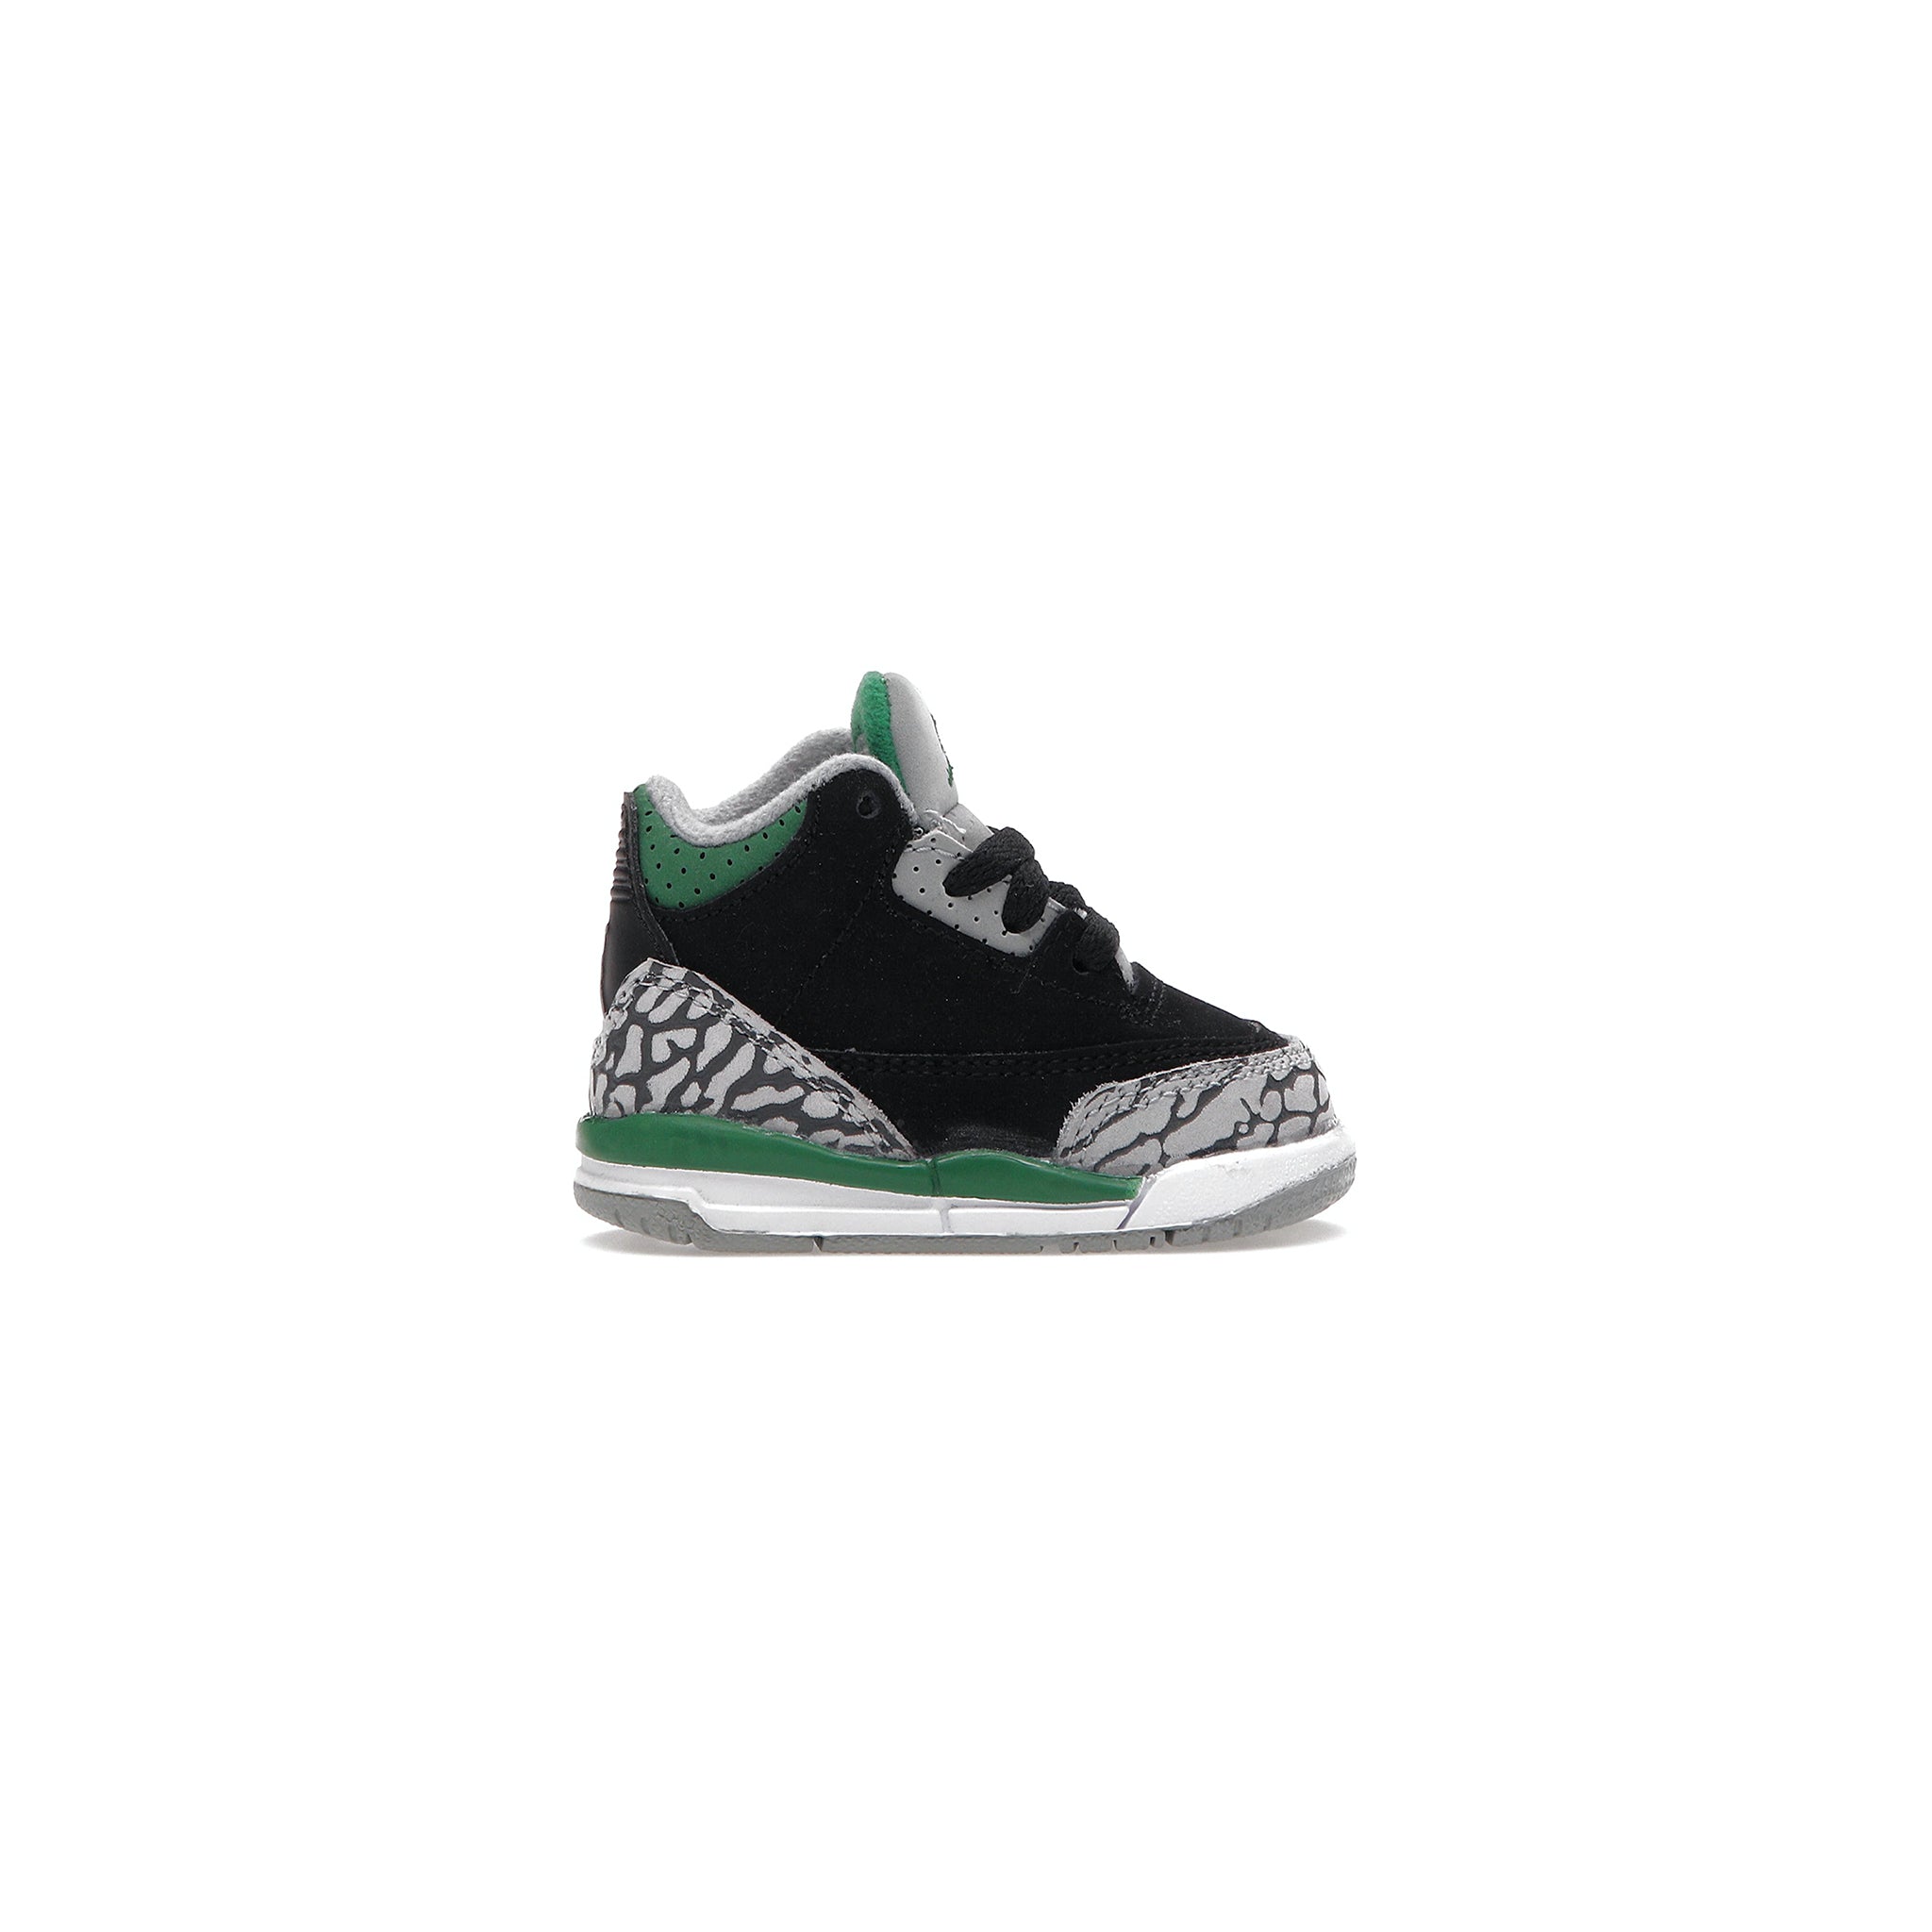 Air Jordan 3 Retro 'Pine Green